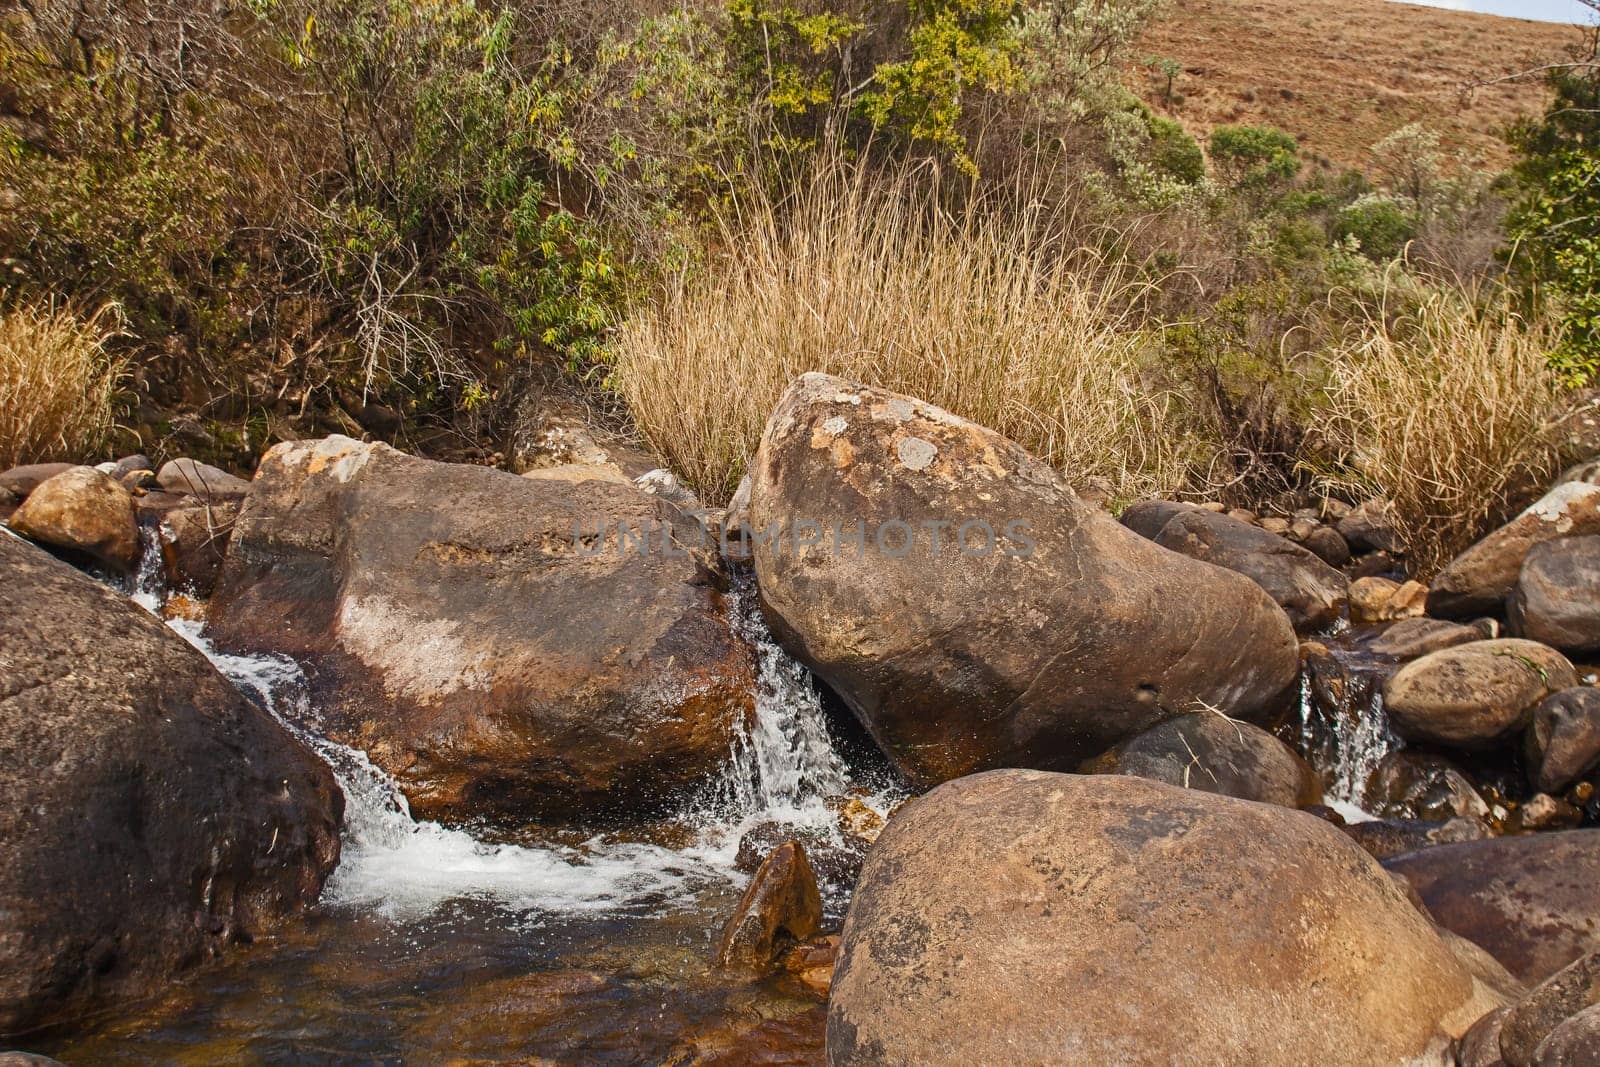 Drakensberg Mountain Stream 15643 by kobus_peche